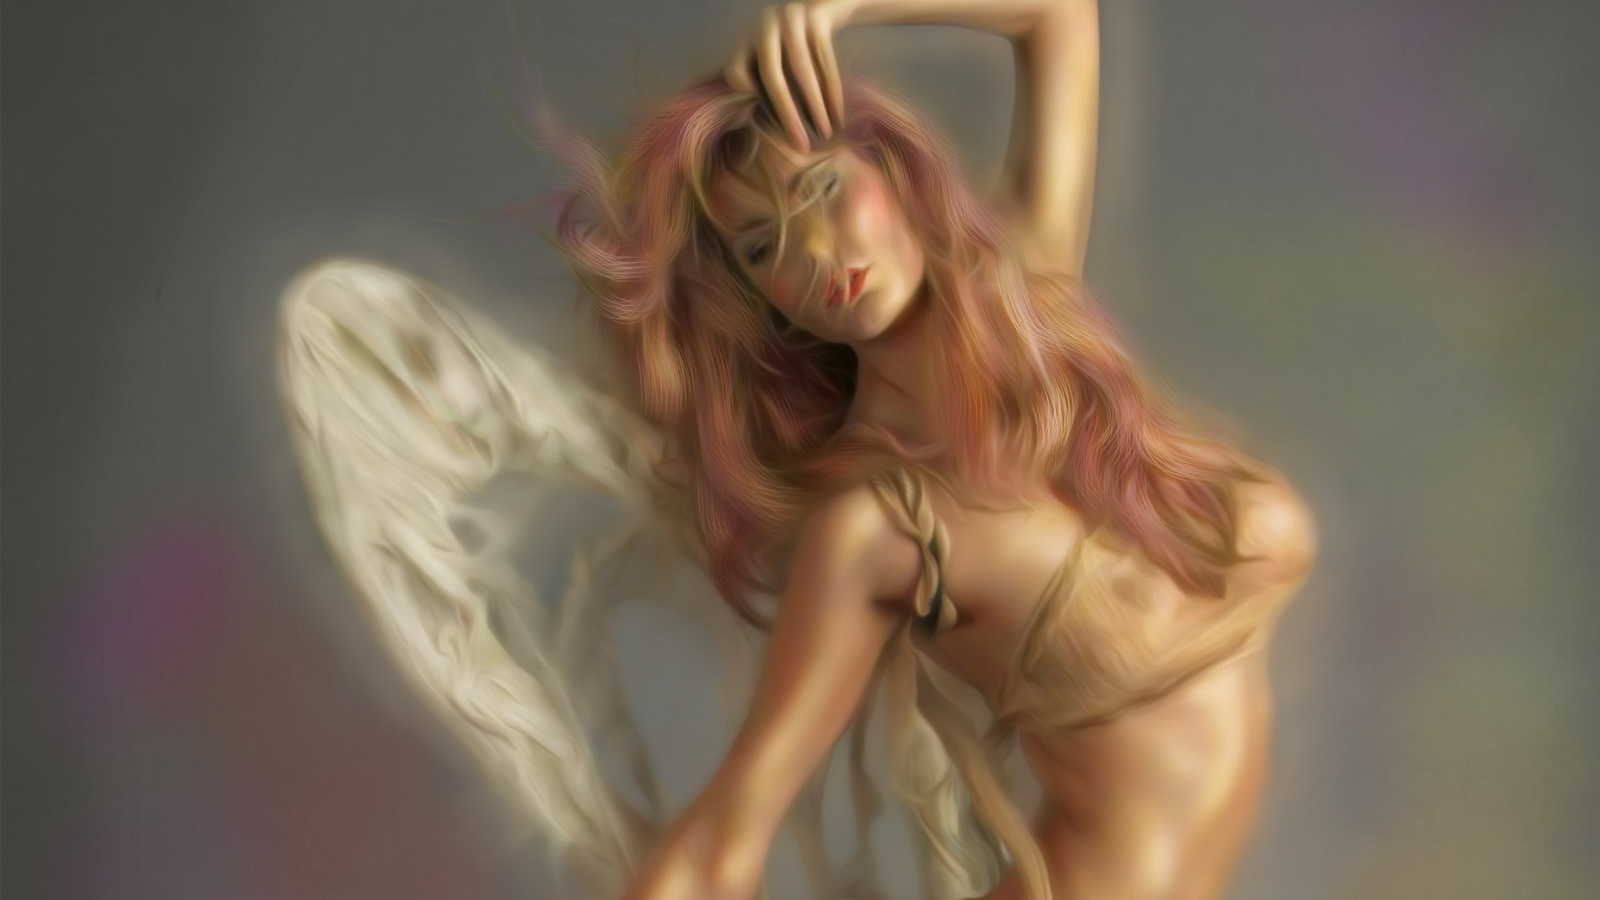 angel, hands, wings, hair, body, pose, girl, face